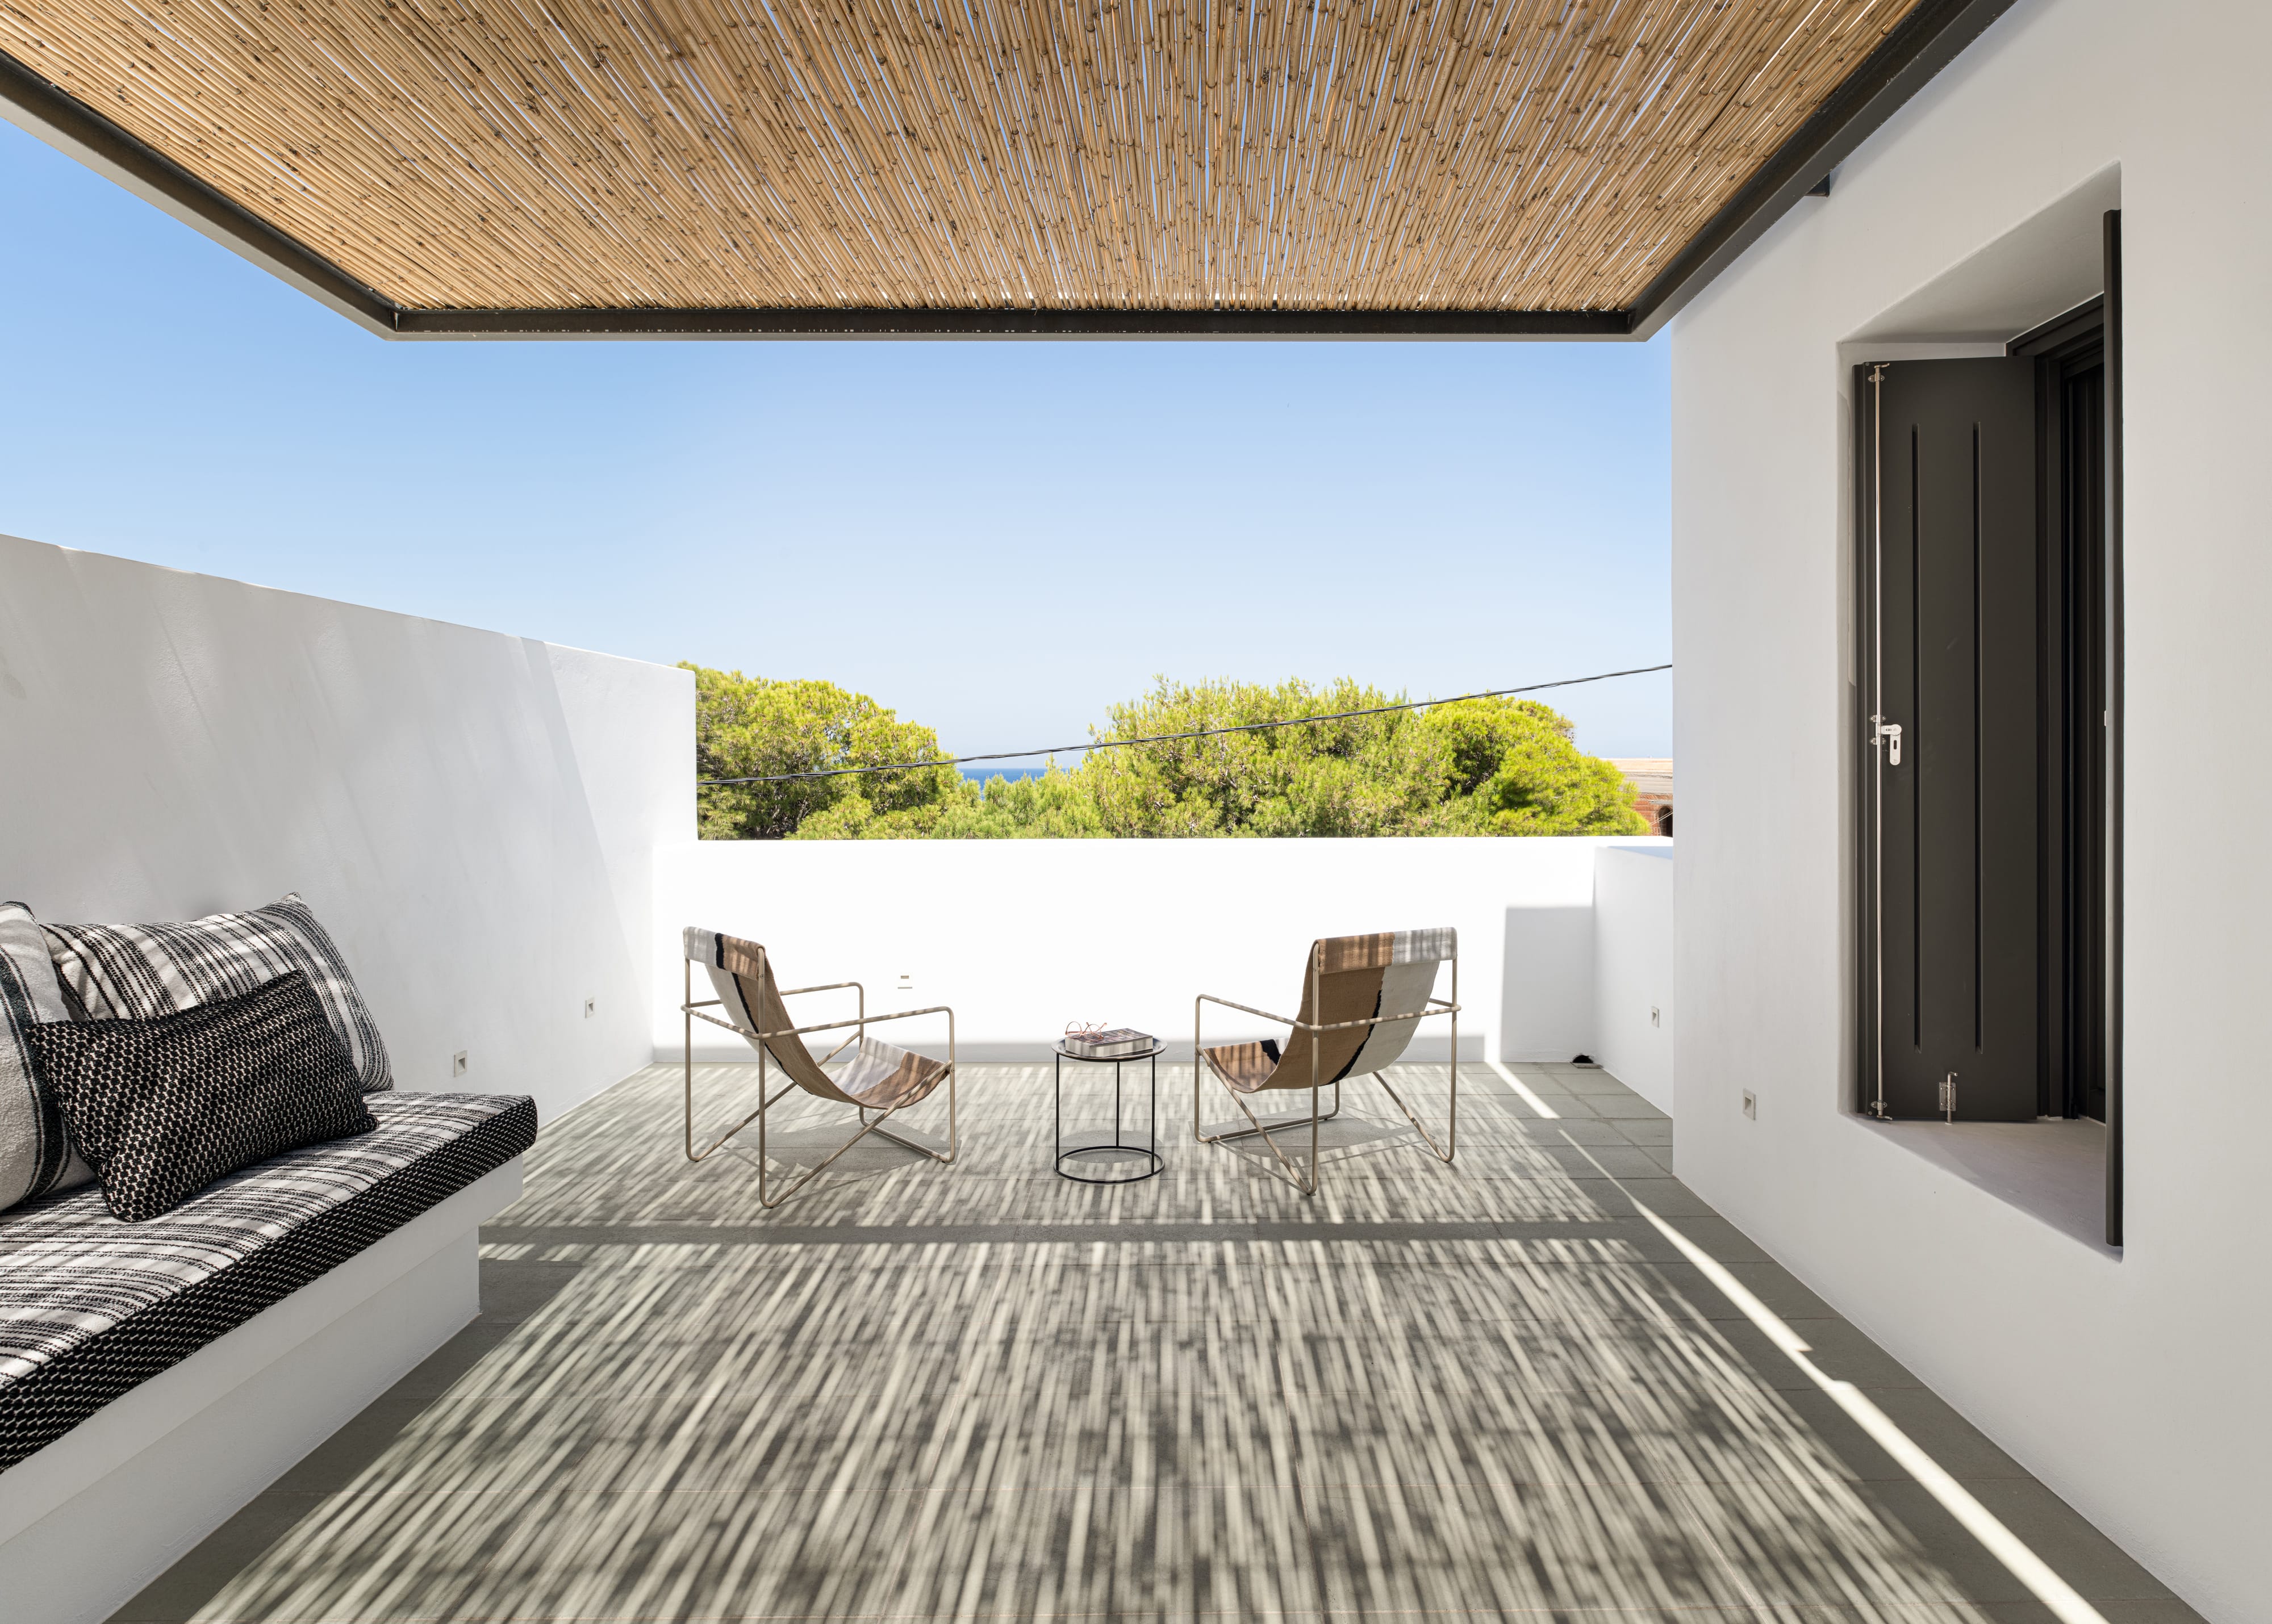 Evripiotis Architects--Pine House, Paros Island